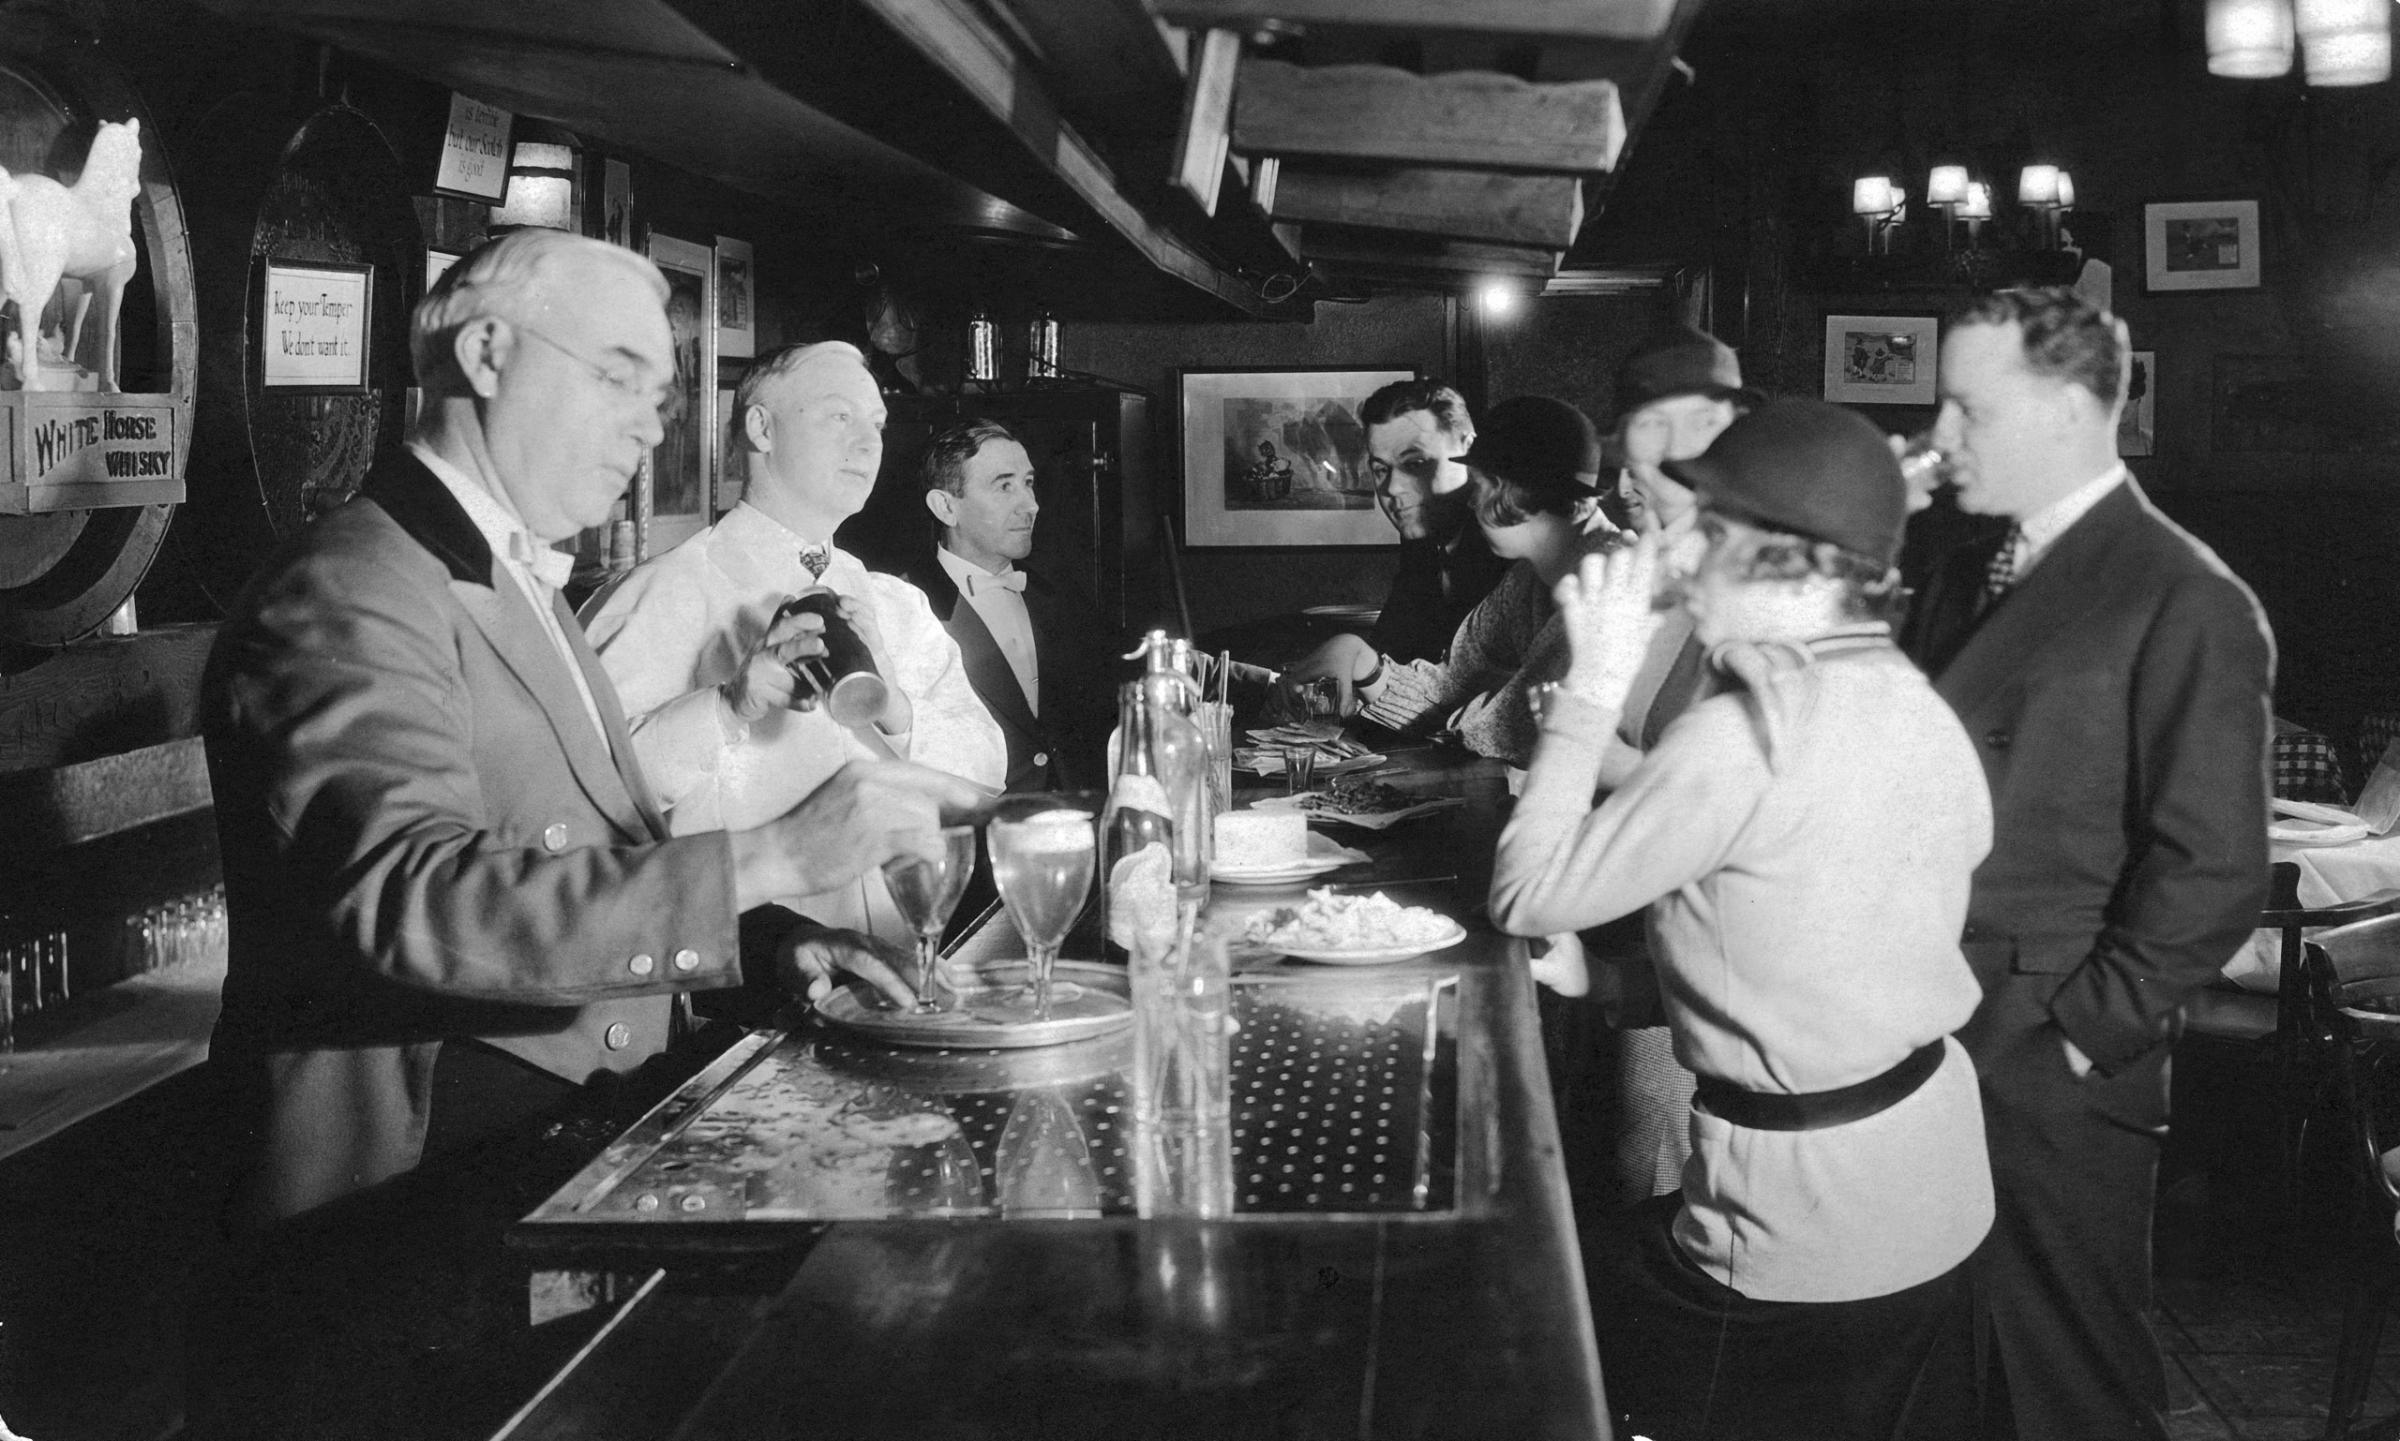 Scene inside a New York City speakeasy during Prohibition, 1933.